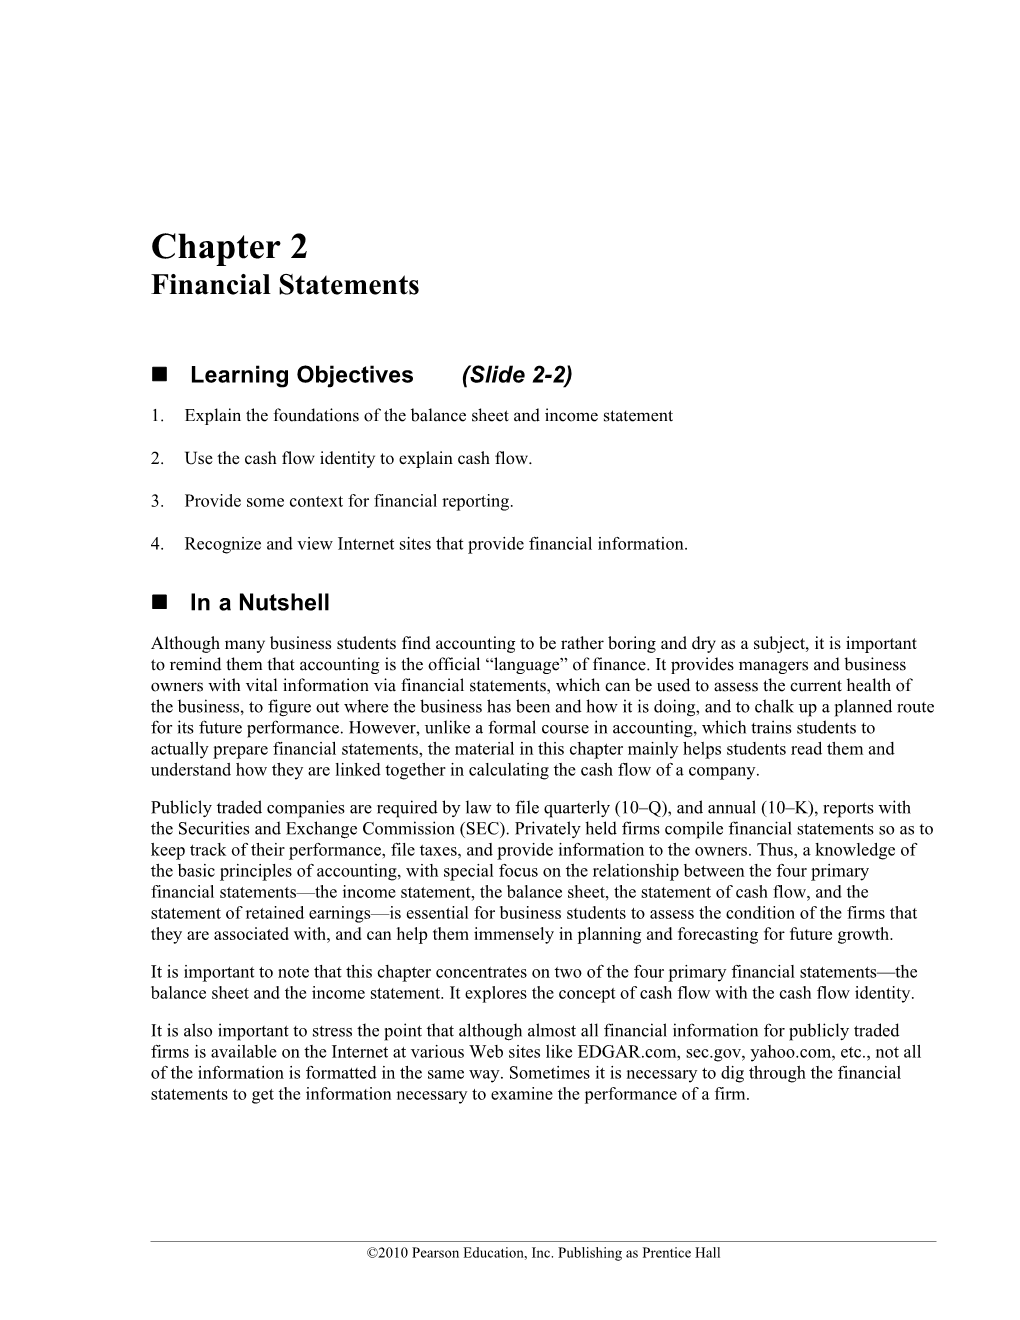 Learning Objectives (Slide 2-2)